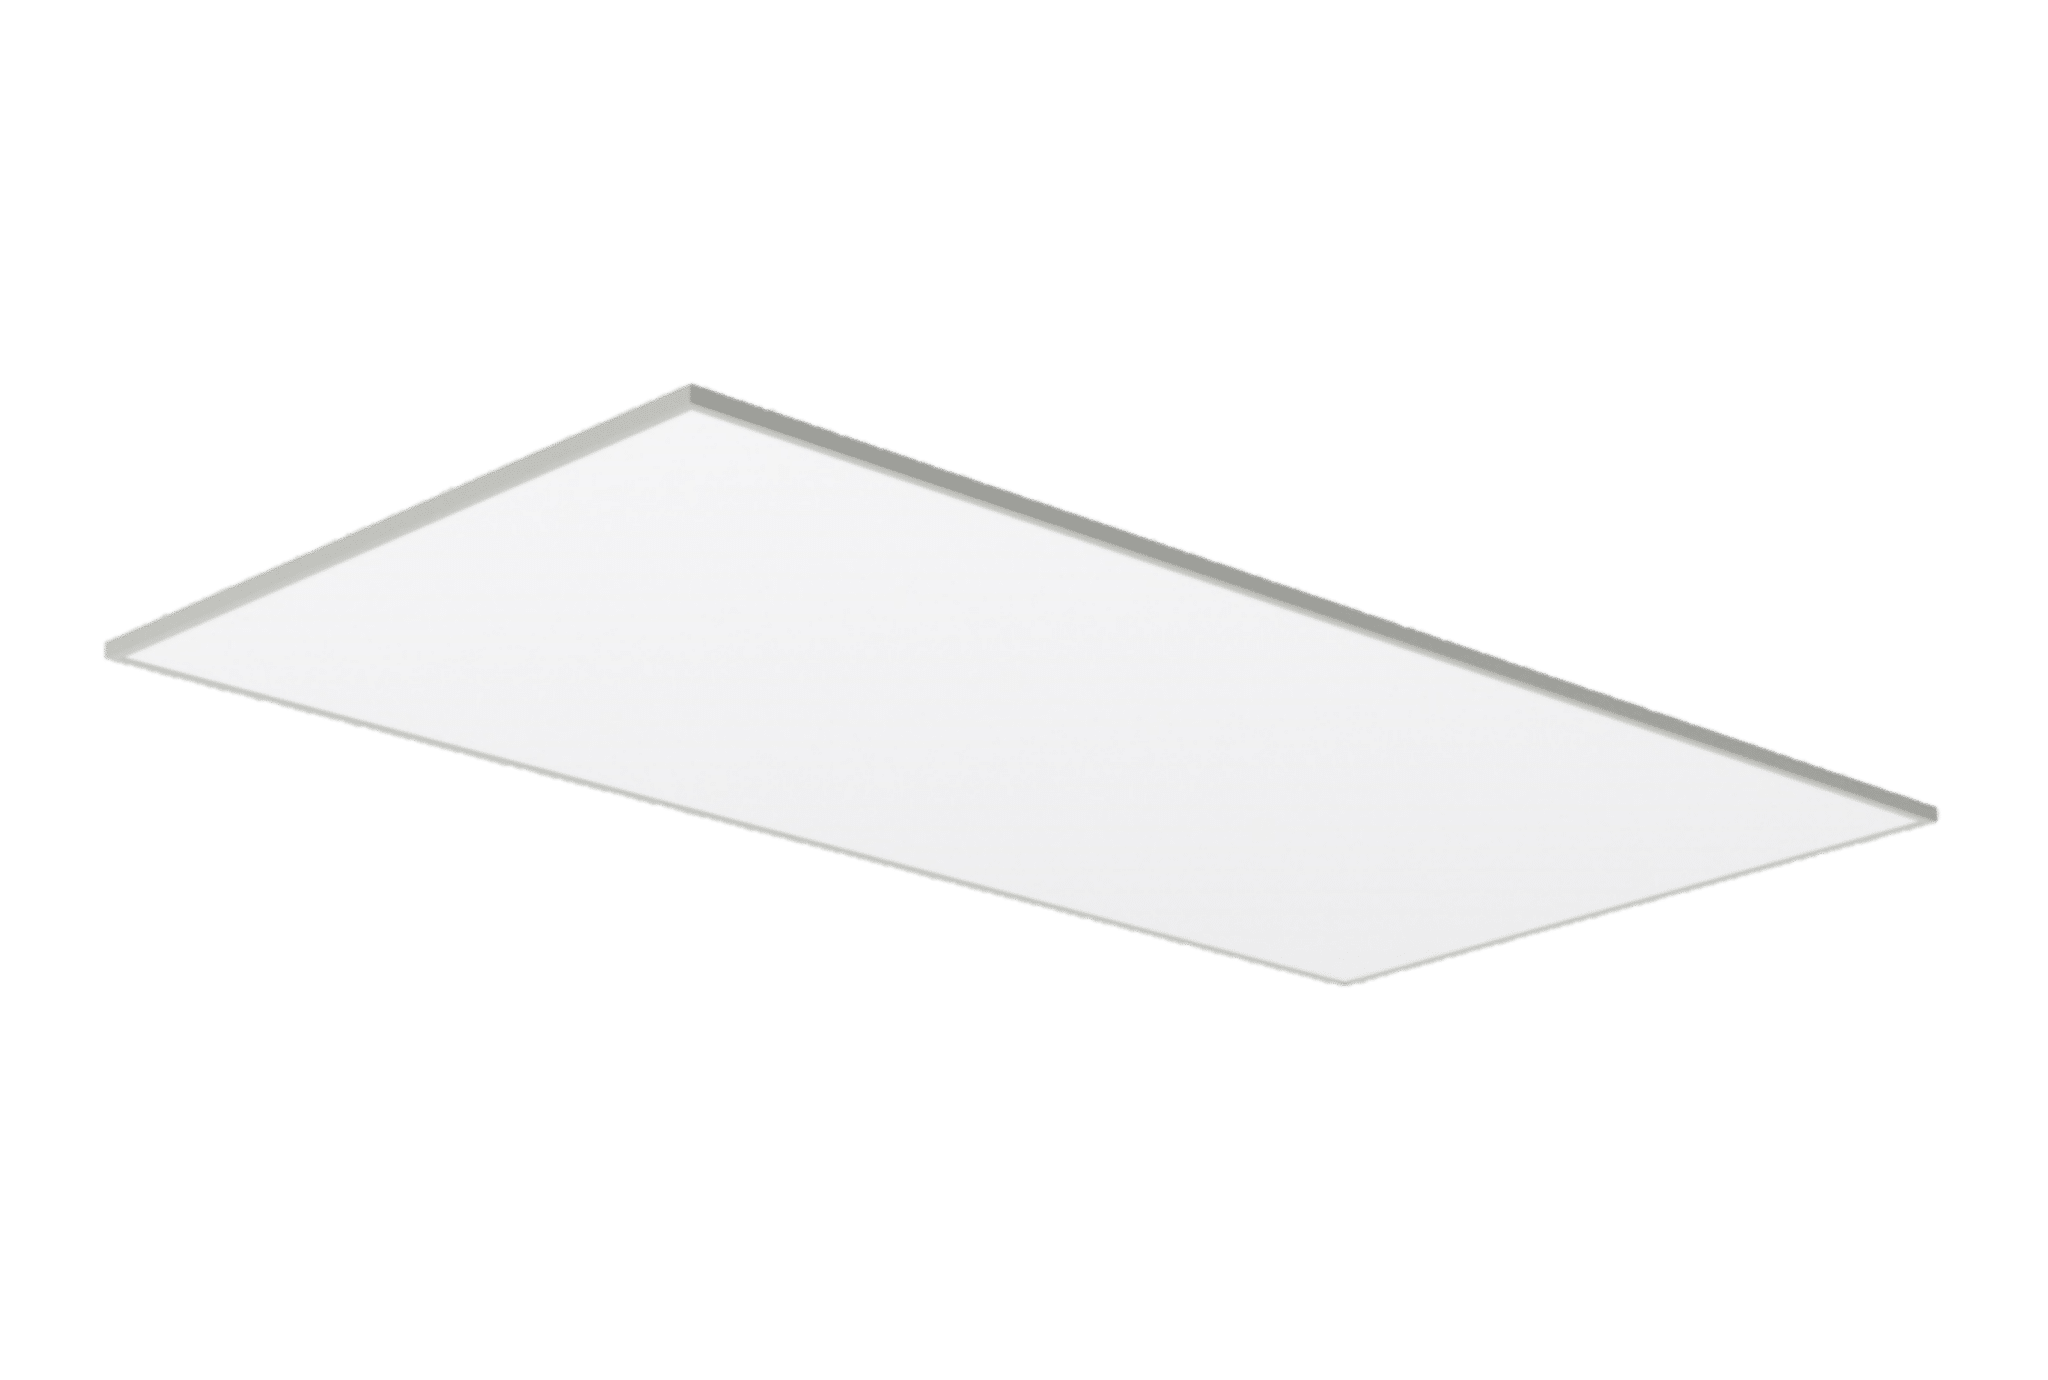 *NEW* KENALL 1x4 ft Enclosed Clean Room Fluorescent Light Fixture 